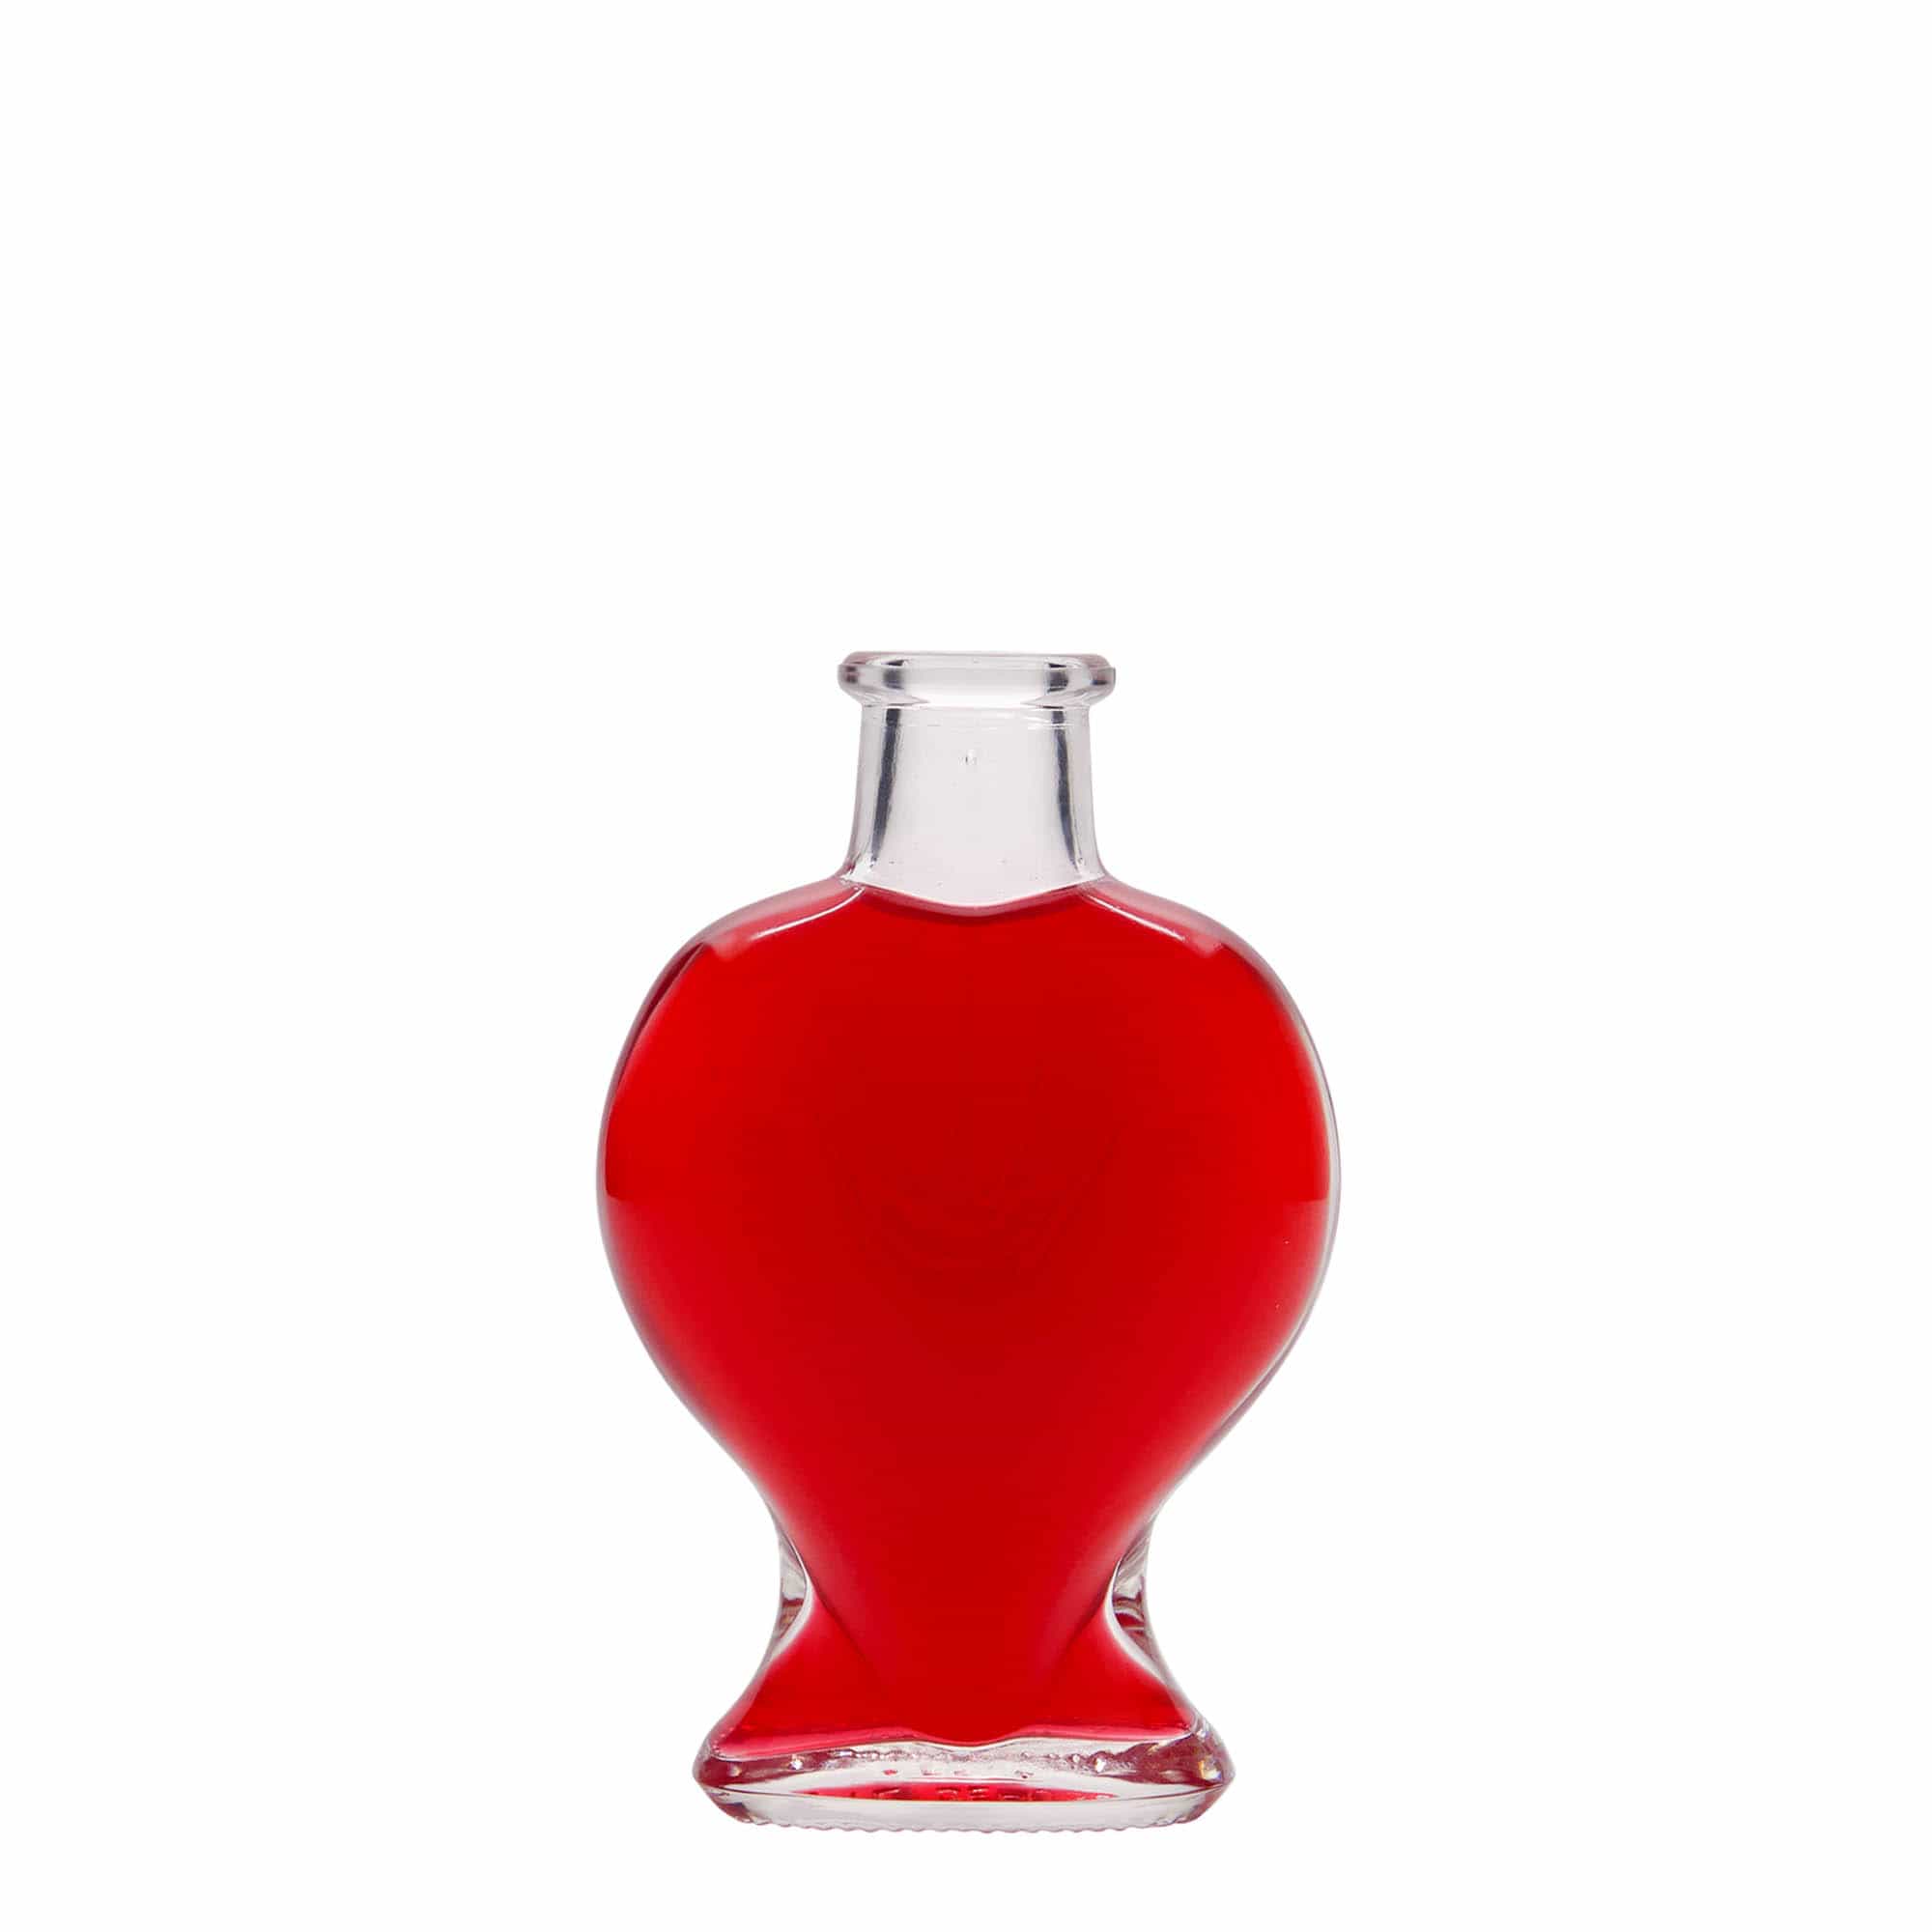 100 ml glass bottle 'Heart', closure: cork